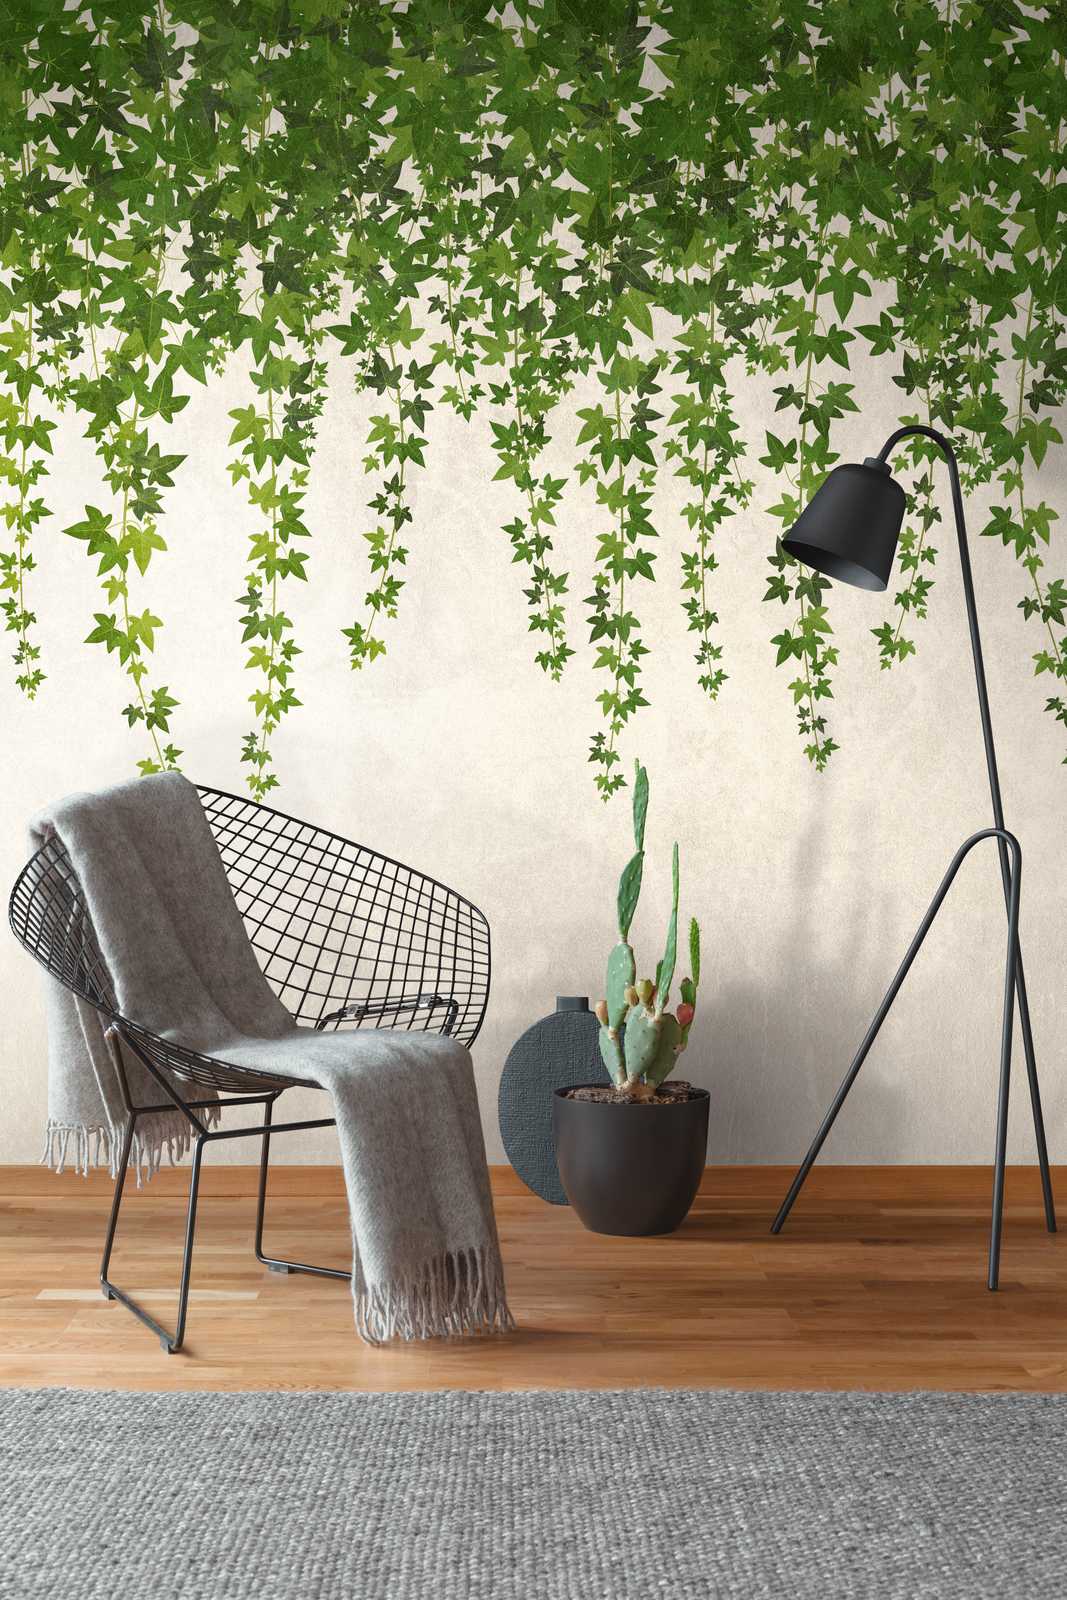             Wallpaper novelty - motif wallpaper hanging ivy & concrete wall
        